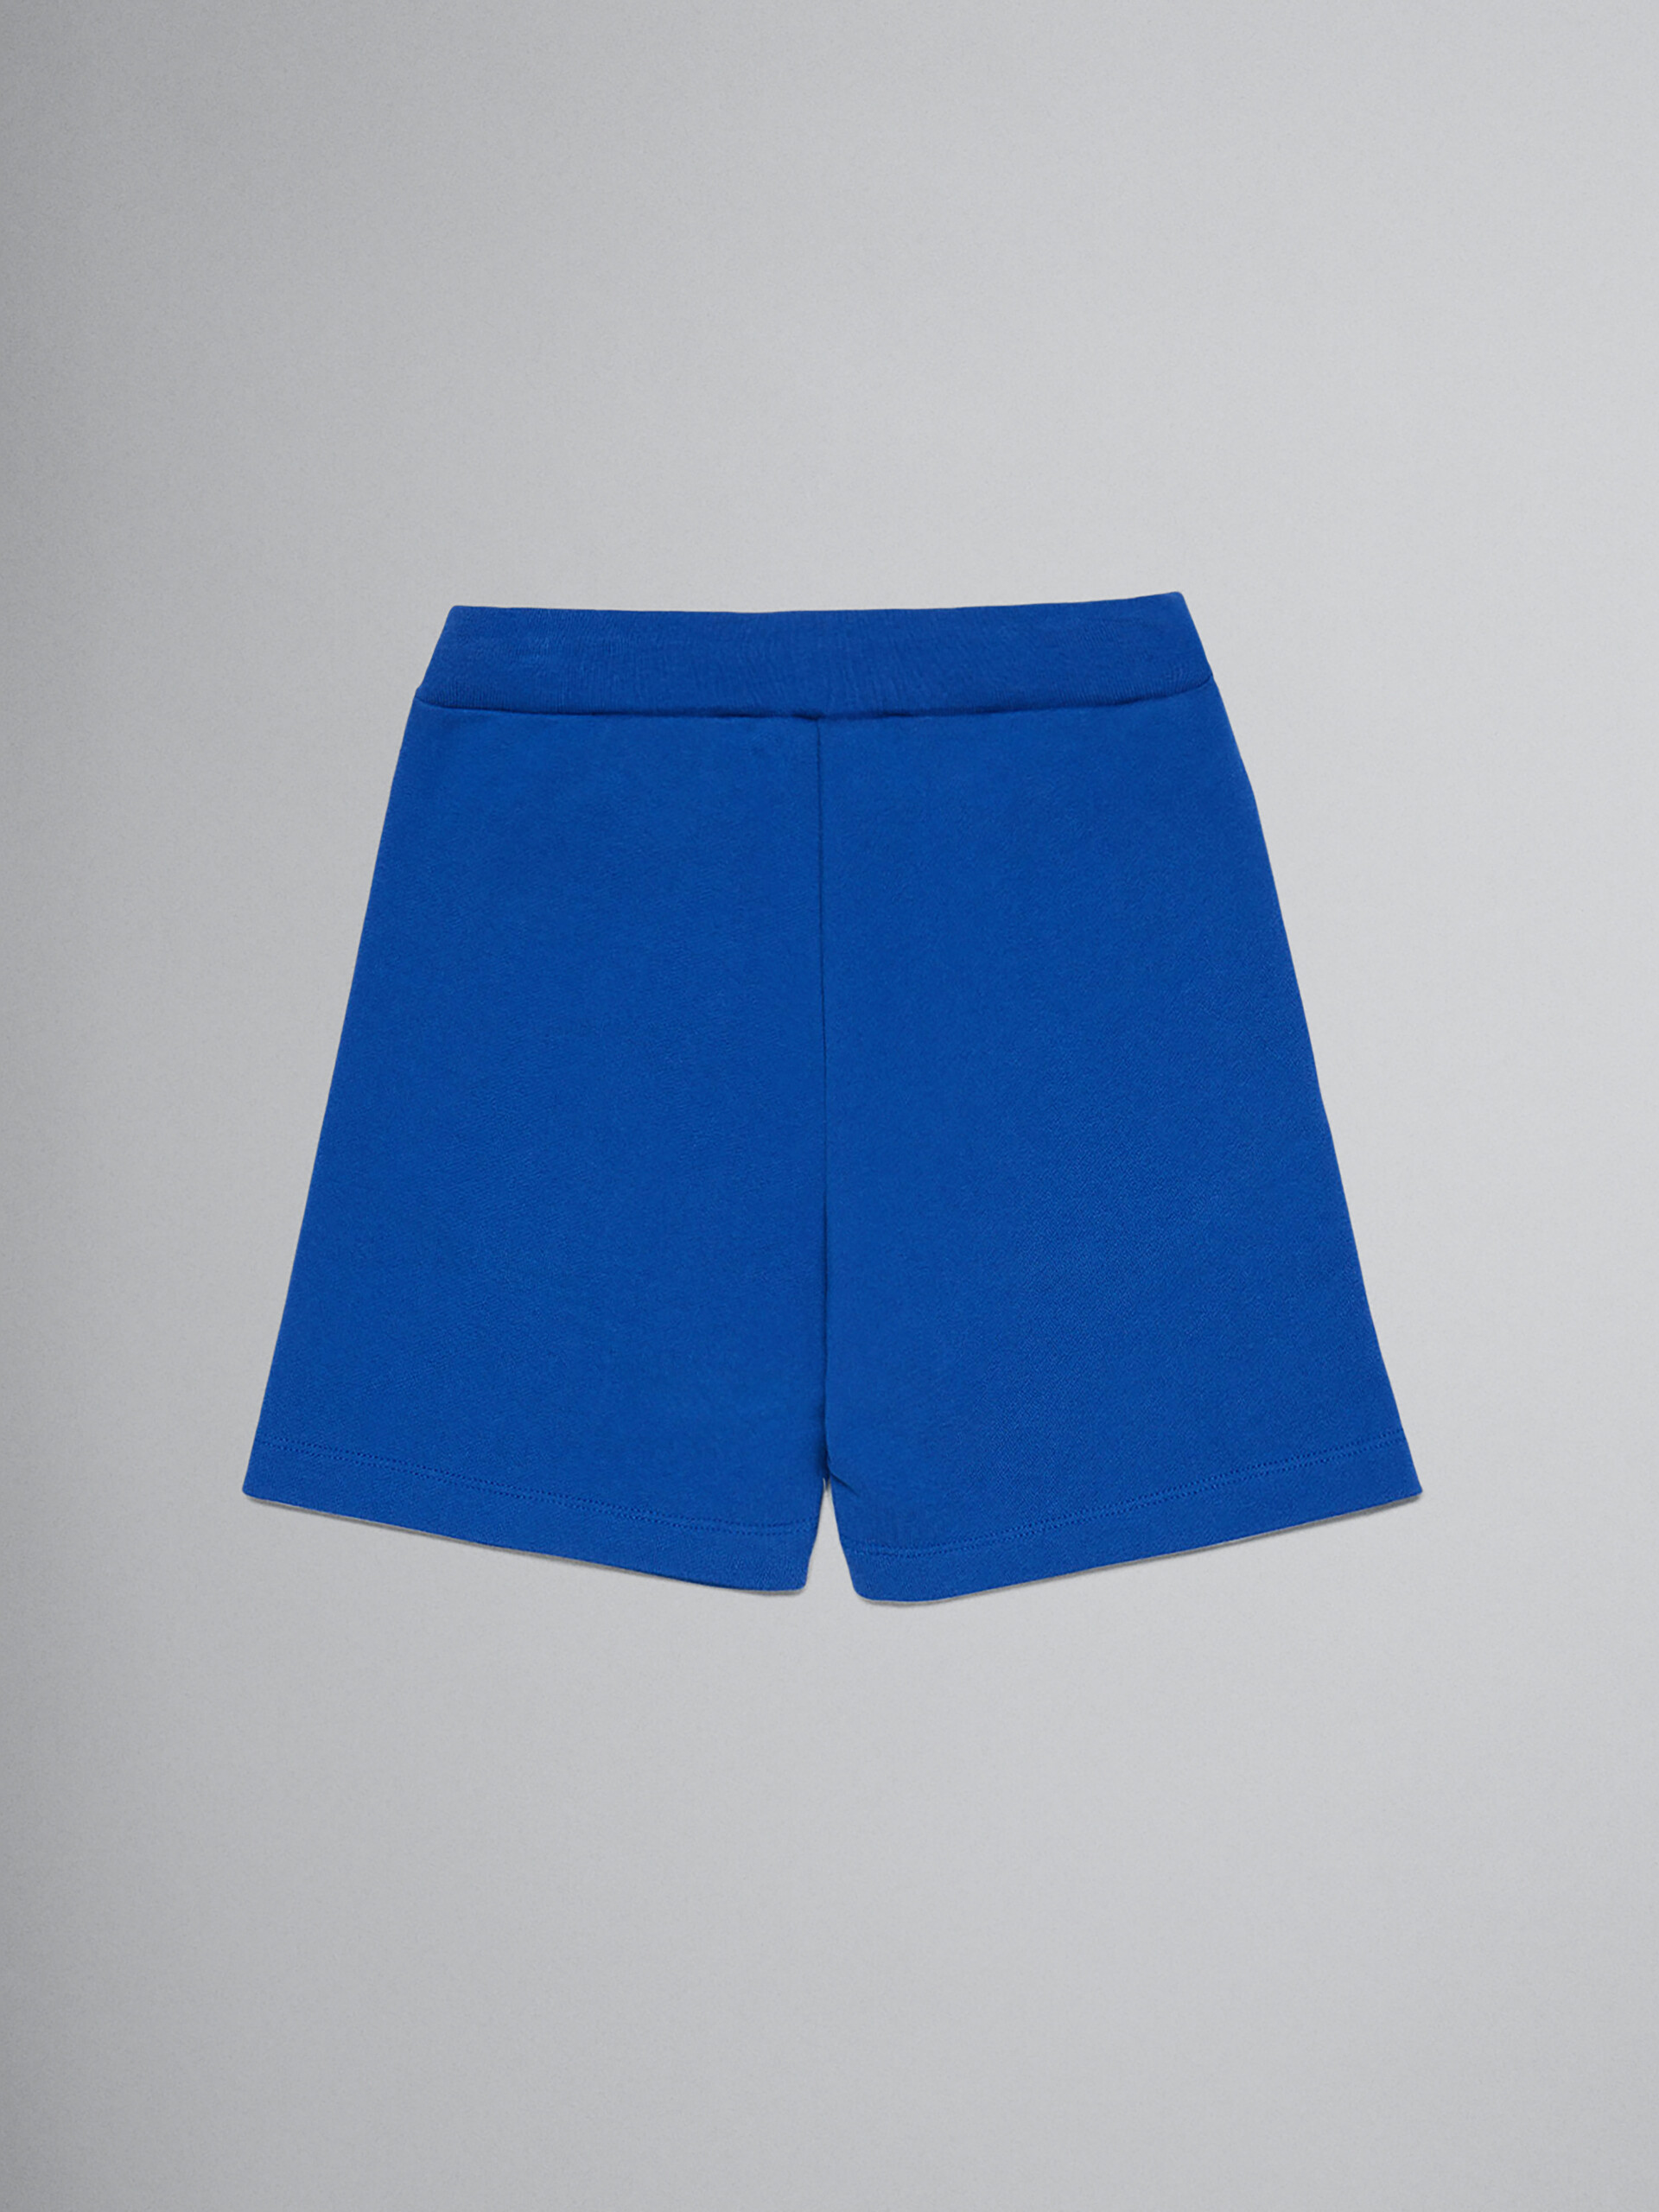 Shorts blu in felpa con logo - Pantaloni - Image 2